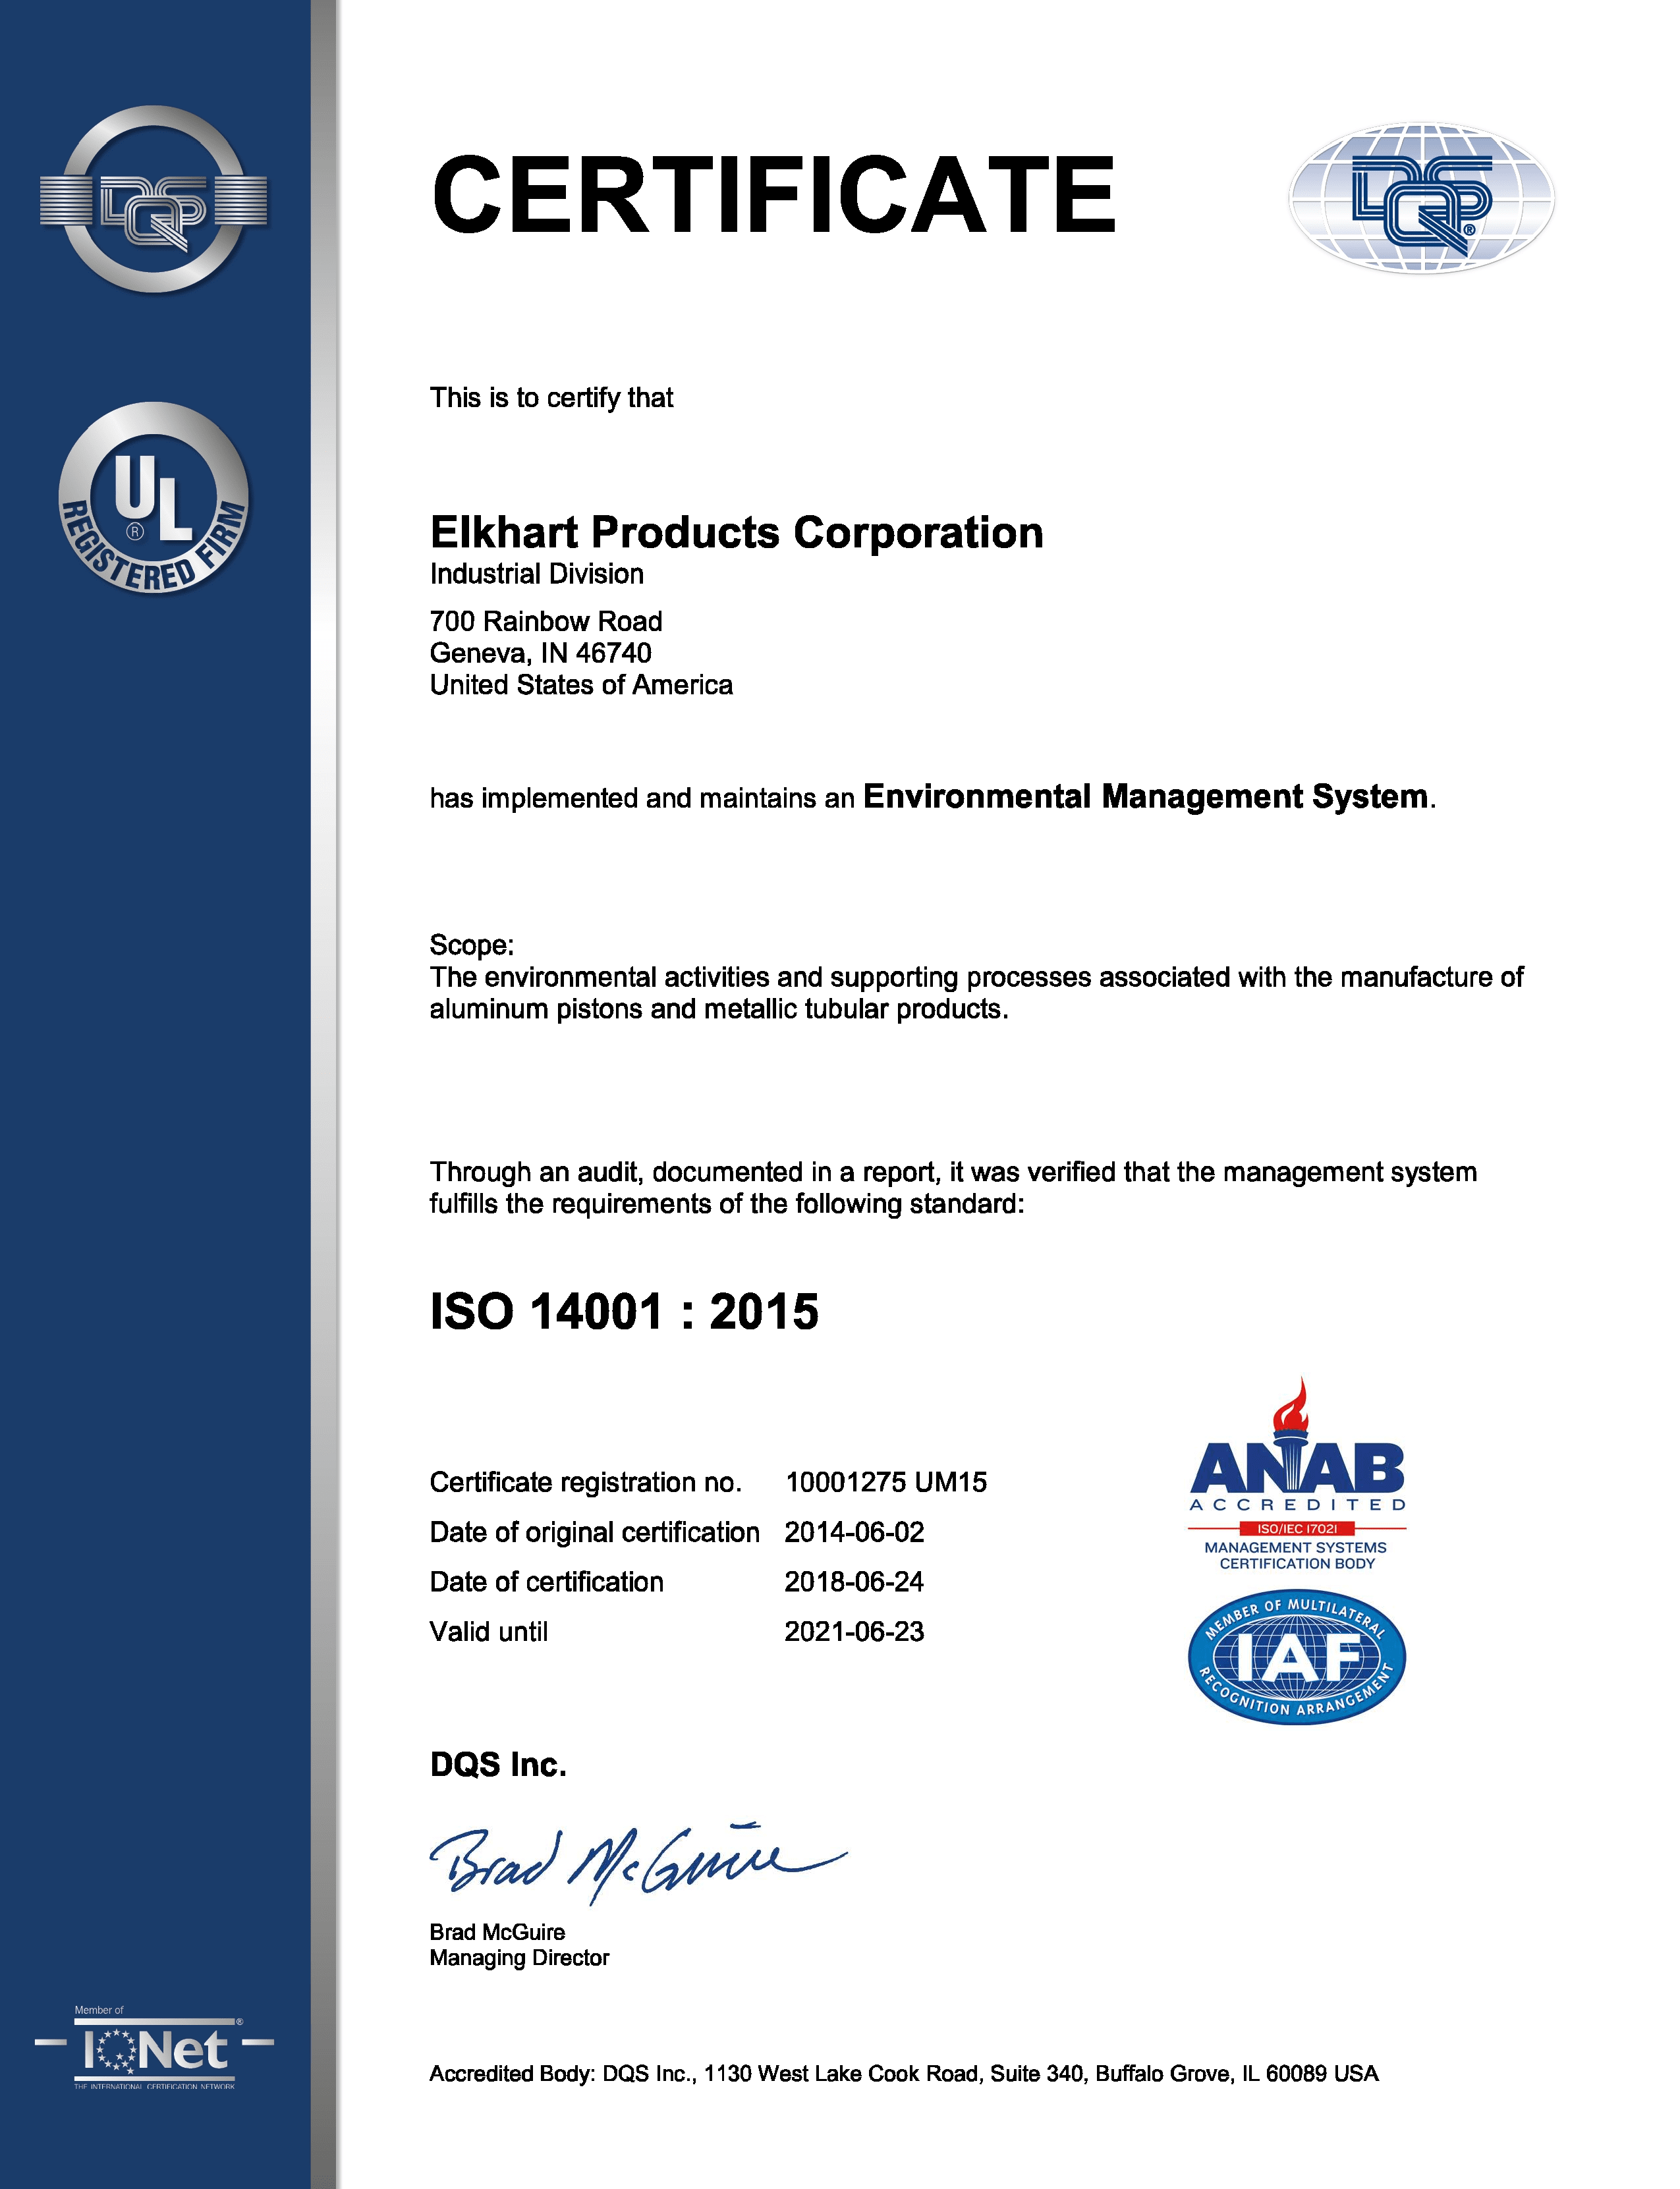 ISO-14001-ETI-Geneva-Indiana